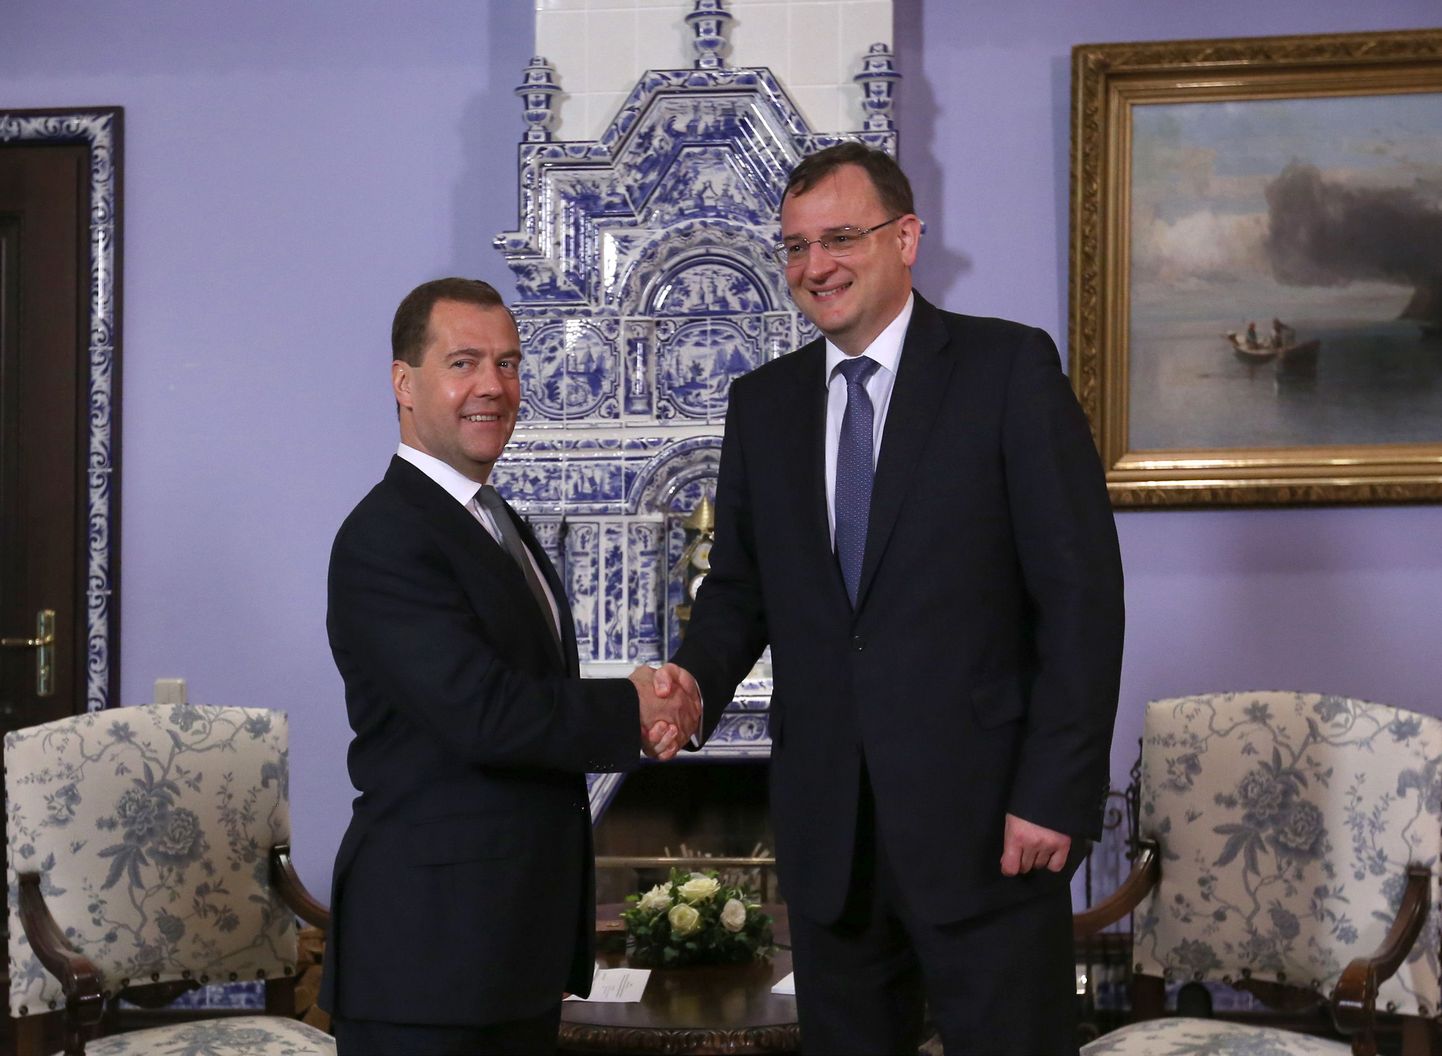 Vene peaminister Dmitri Medvedev (vasakul) koos Tšehhi valitsusjuhi Petr Nečas täna Gorkis asuvas residentsis.